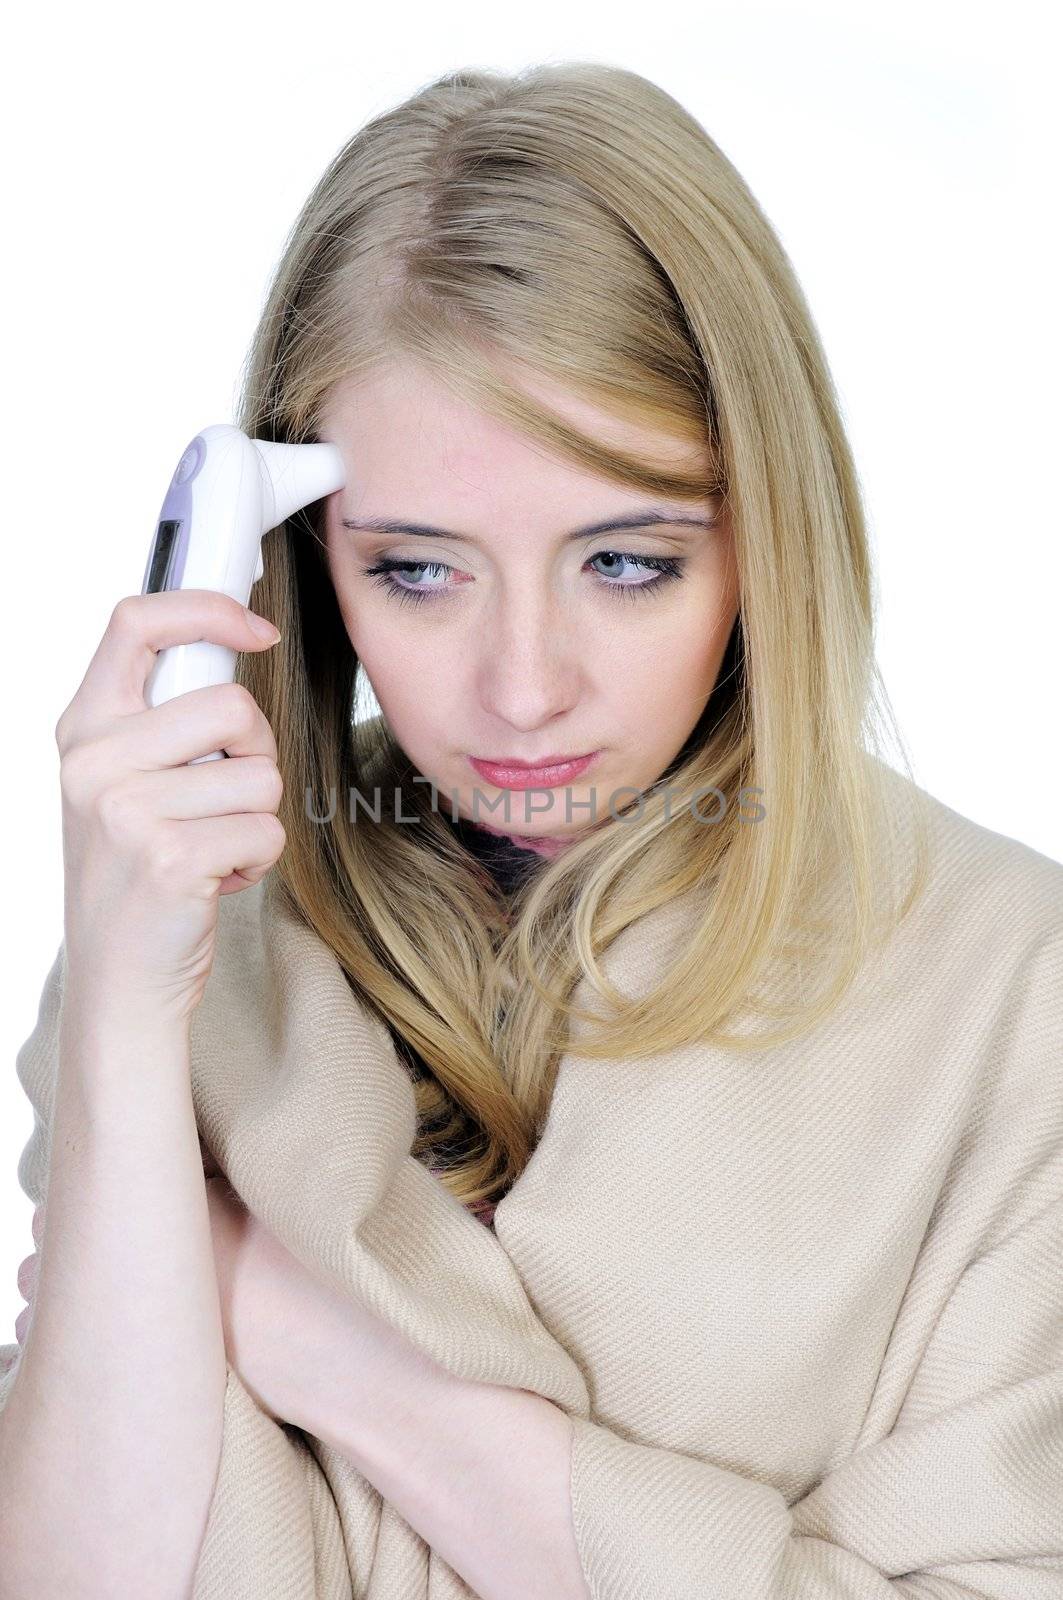 Sick woman measuring temperature